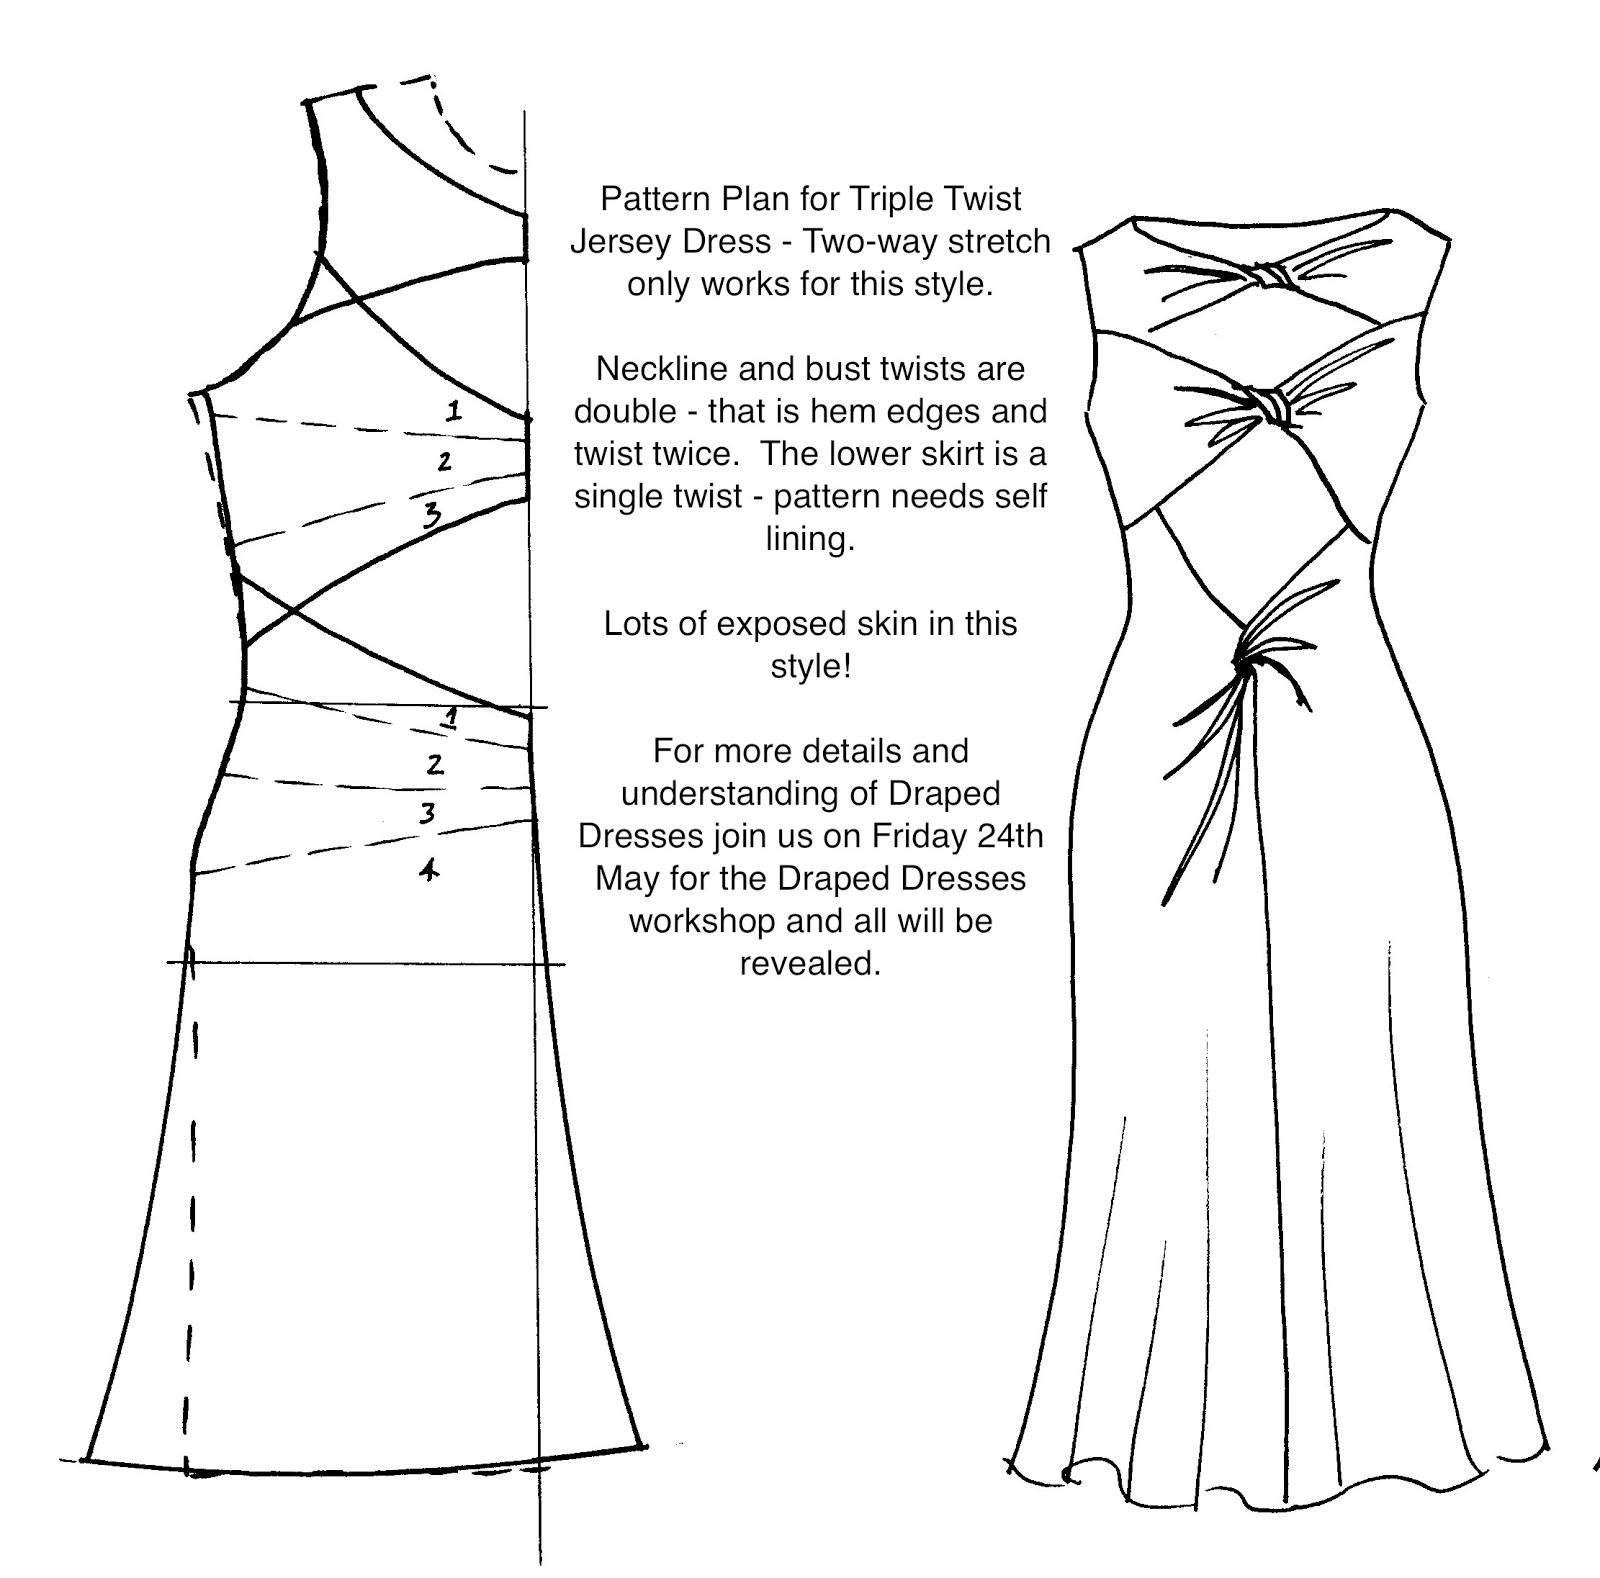 well-suited: Pattern Puzzle - Triple Twist Jersey Dress